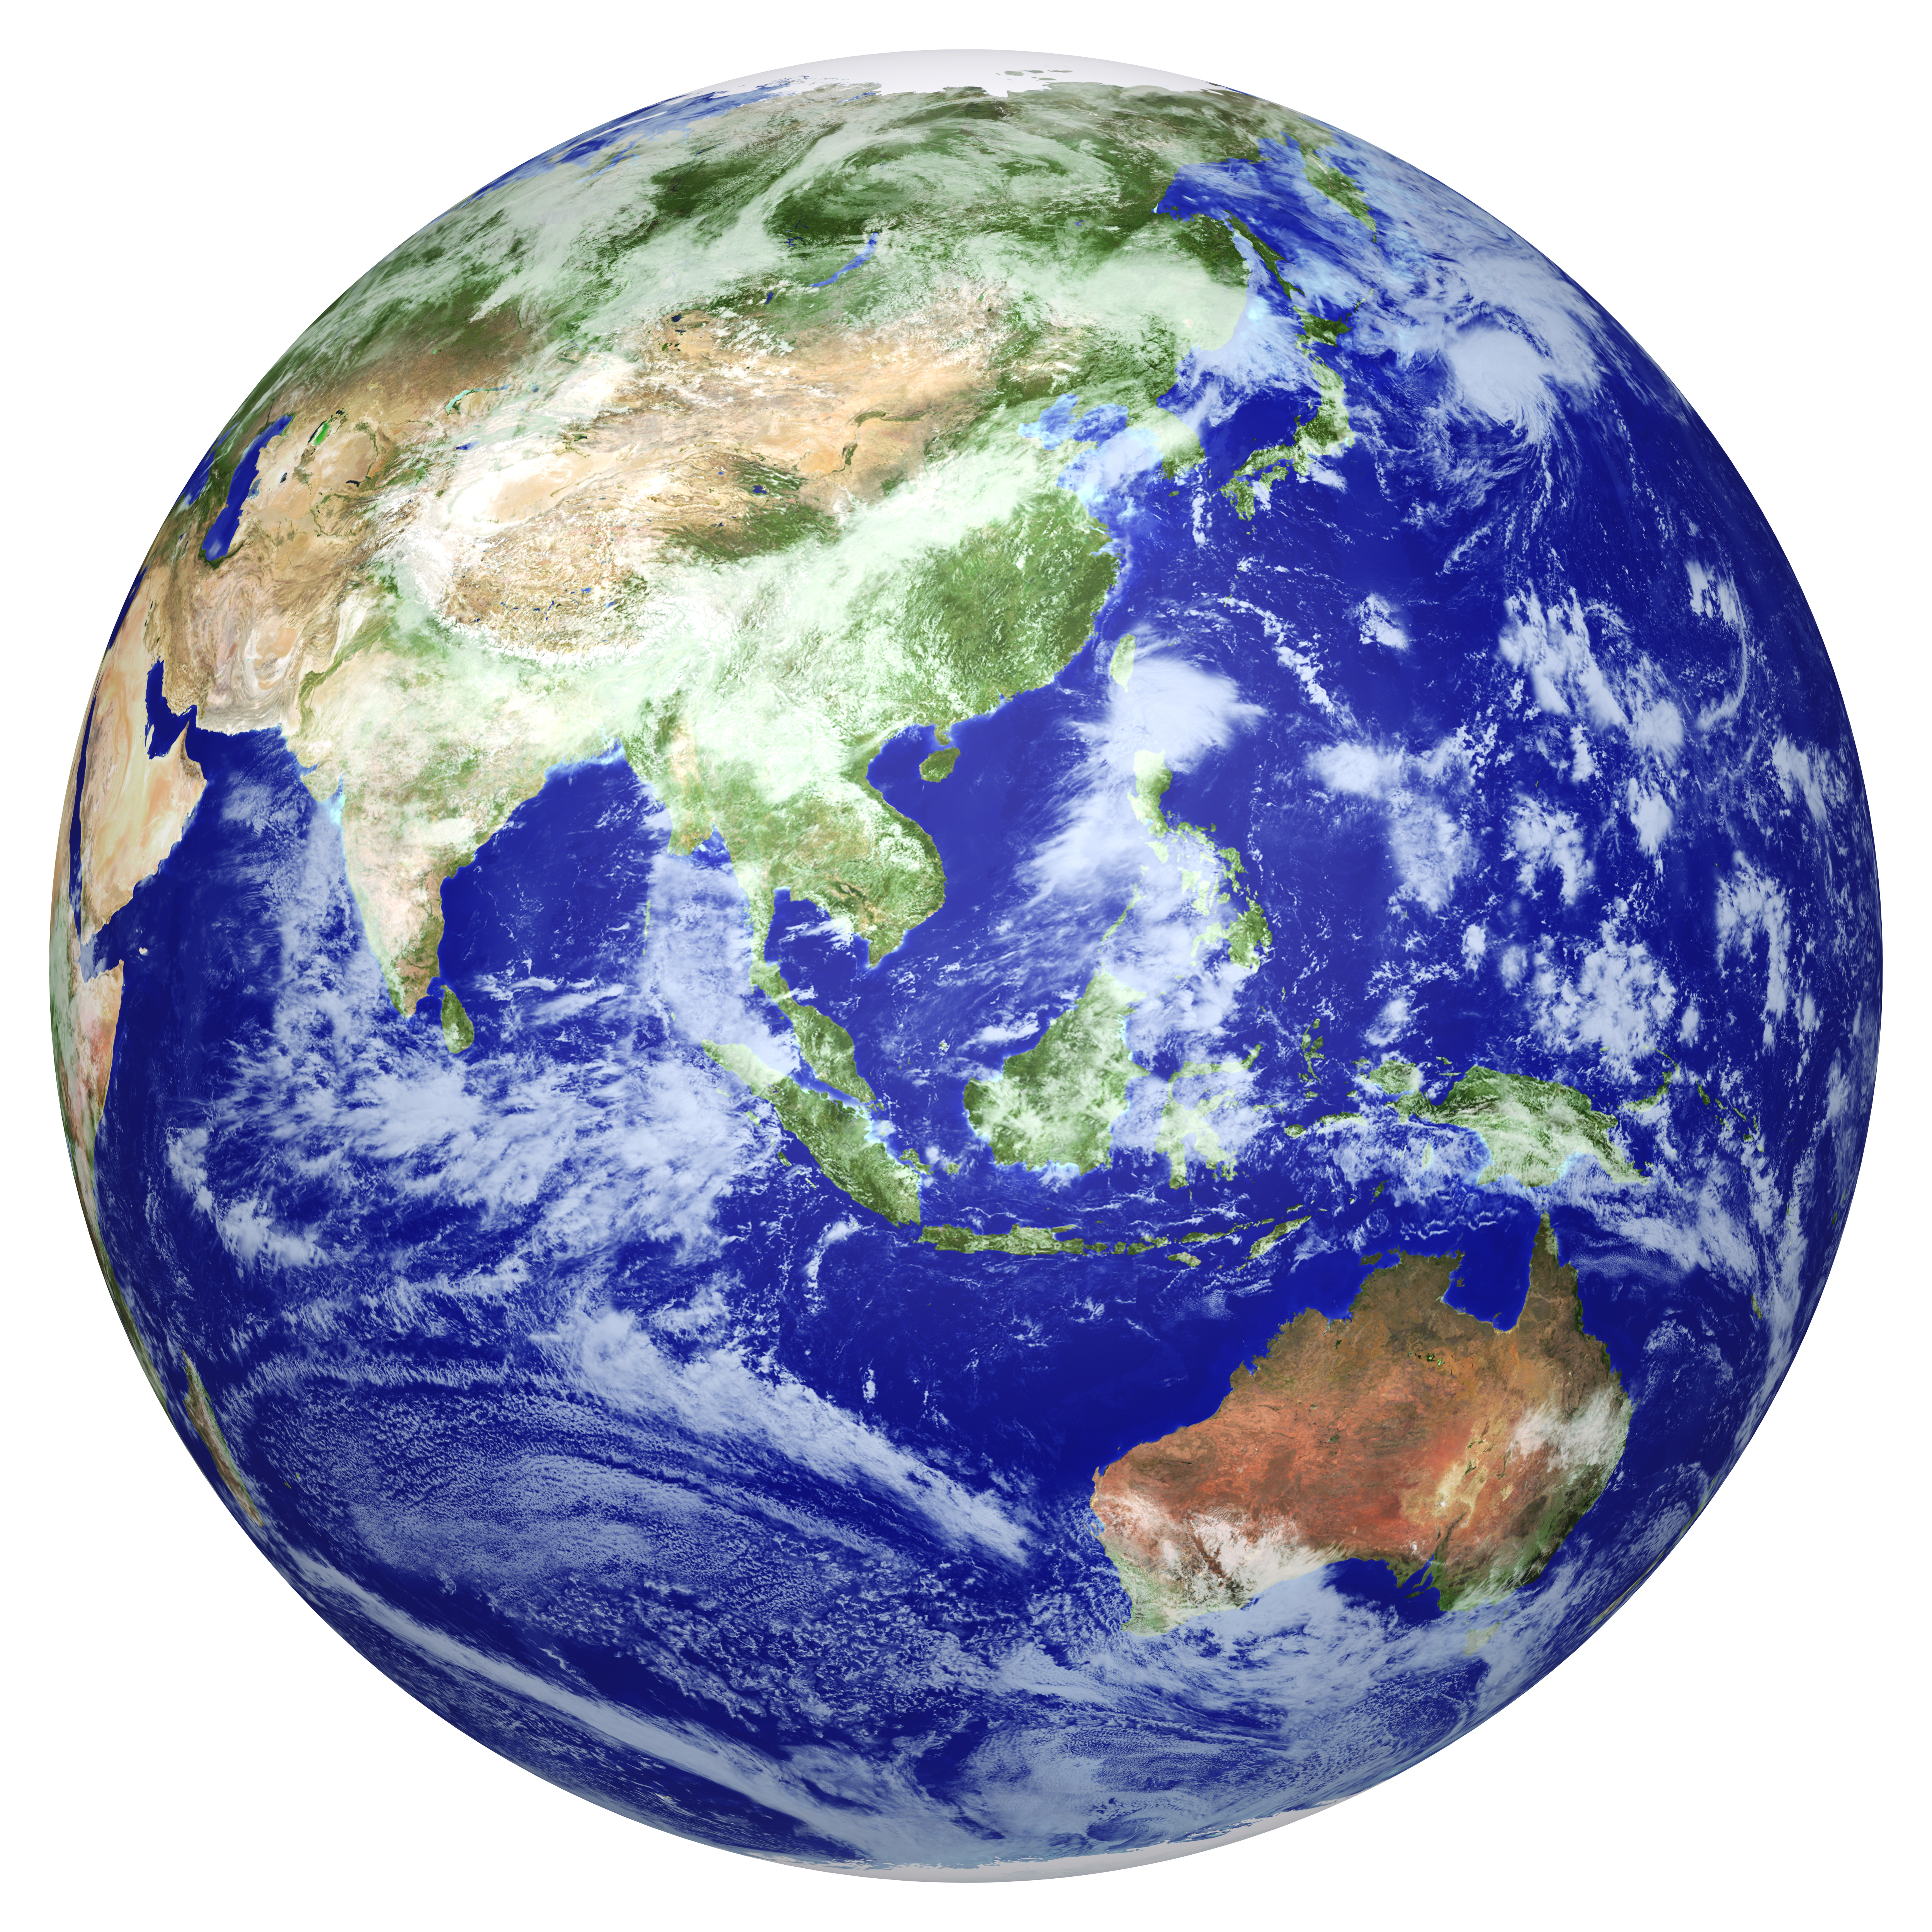 Earth Globe Global Trade Review Gtr